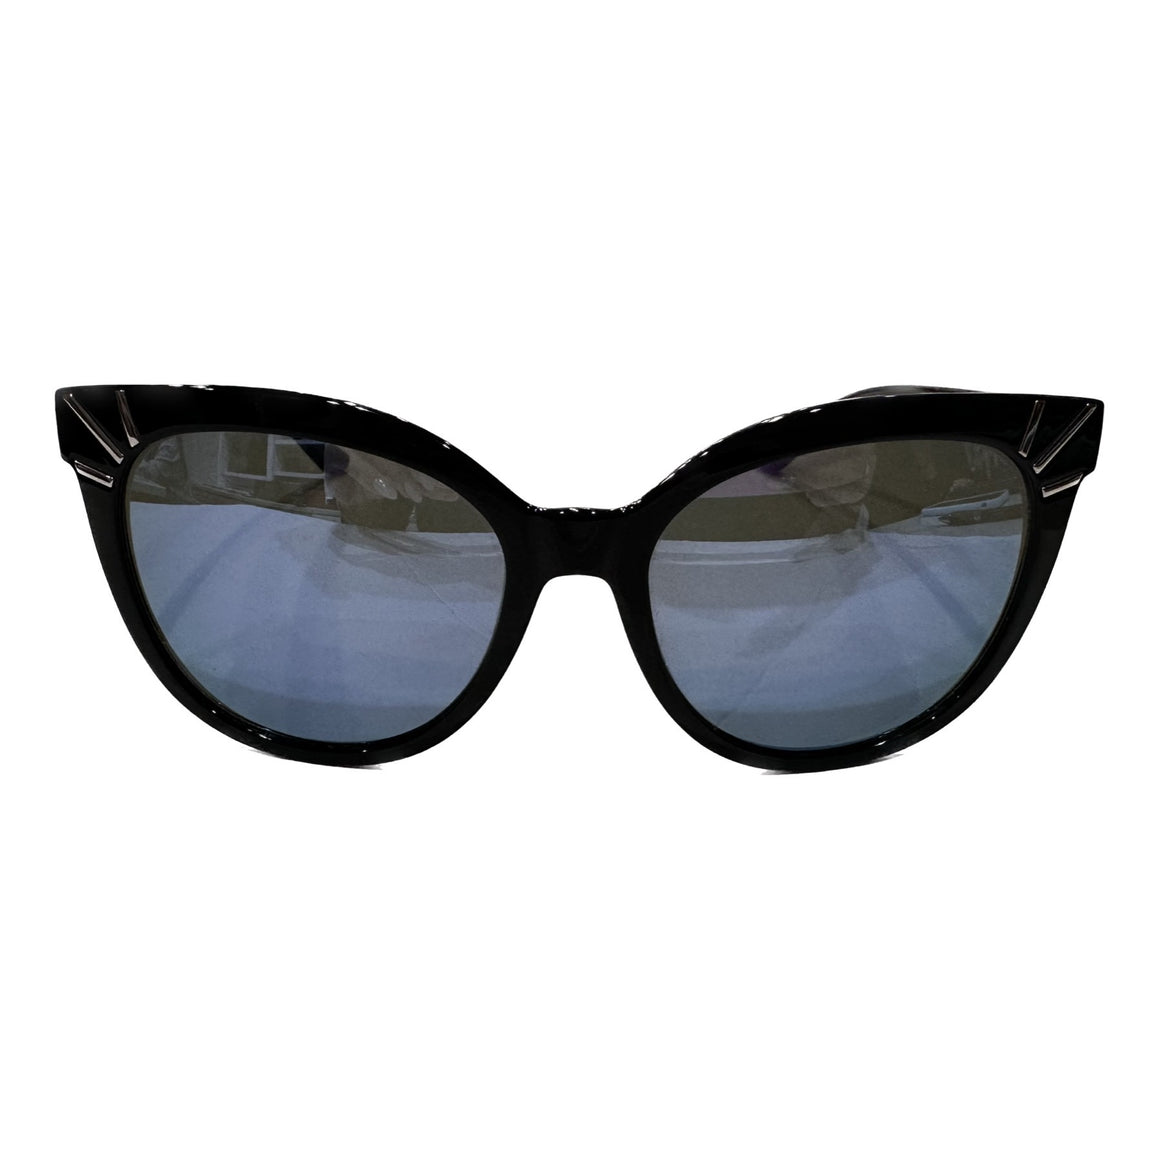 Tory Burch Black/ Silver Cateye Sunglasses